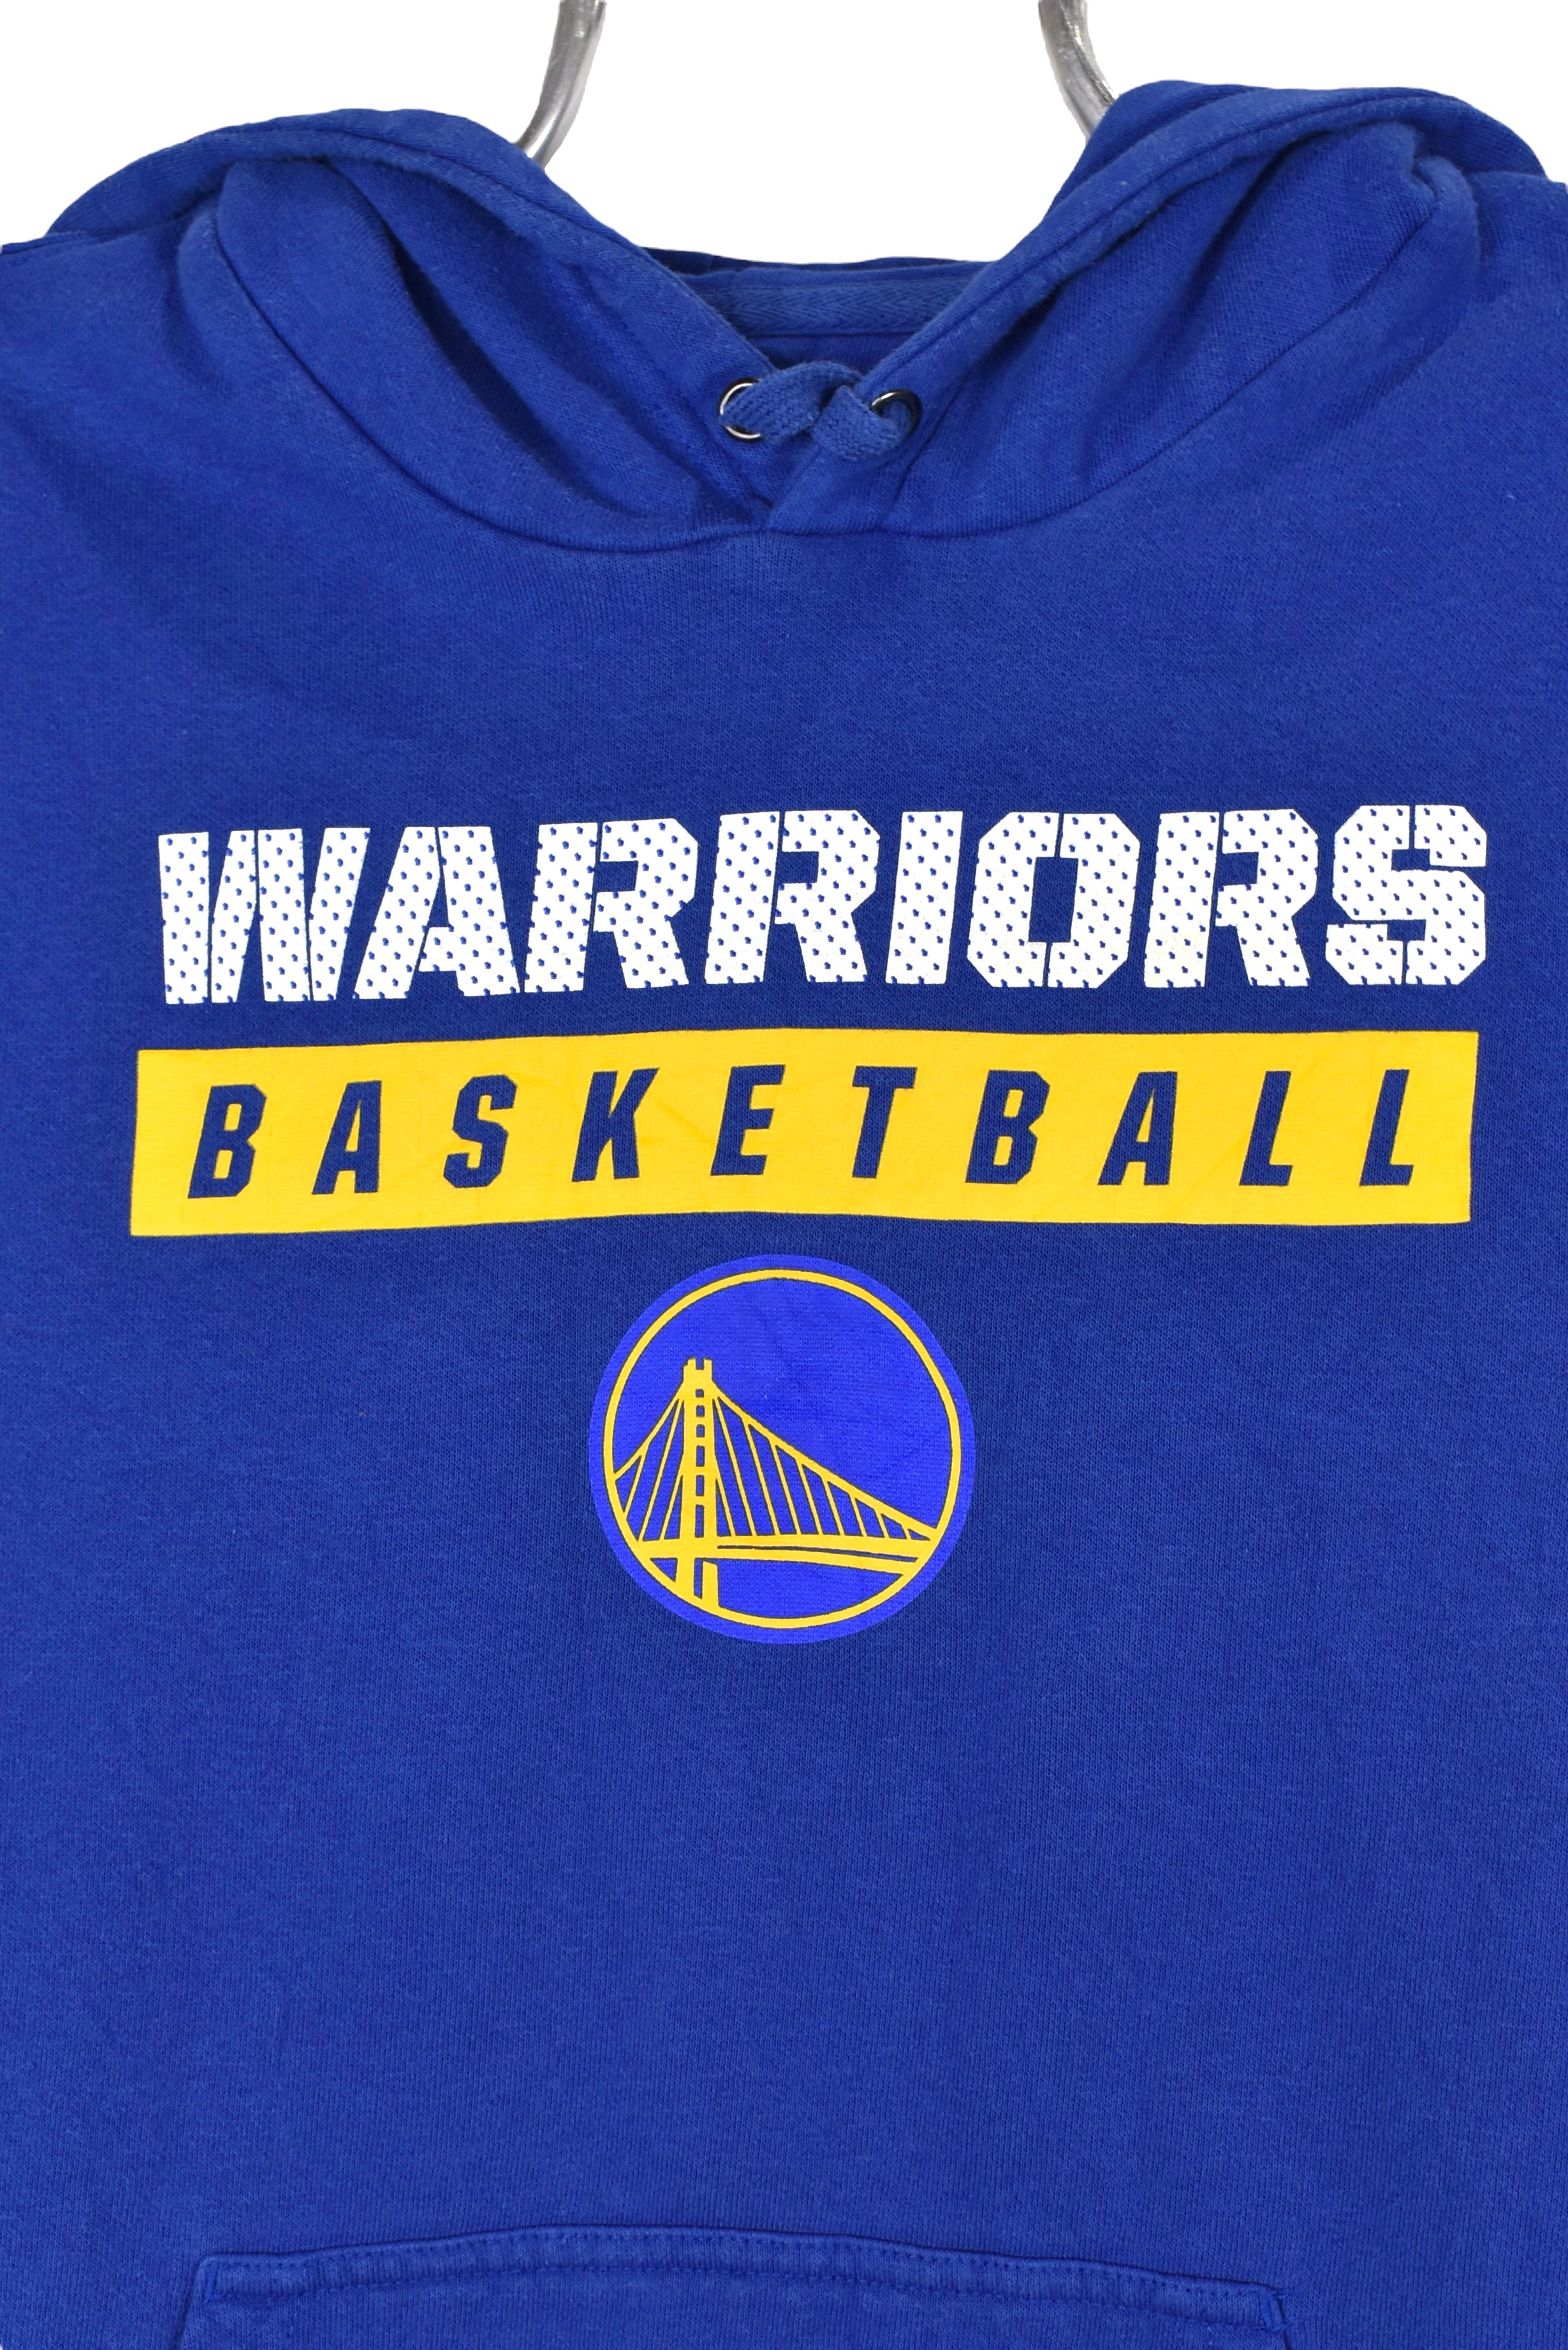 Modern Golden State Warriors hoodie (M), blue NBA graphic sweatshirt